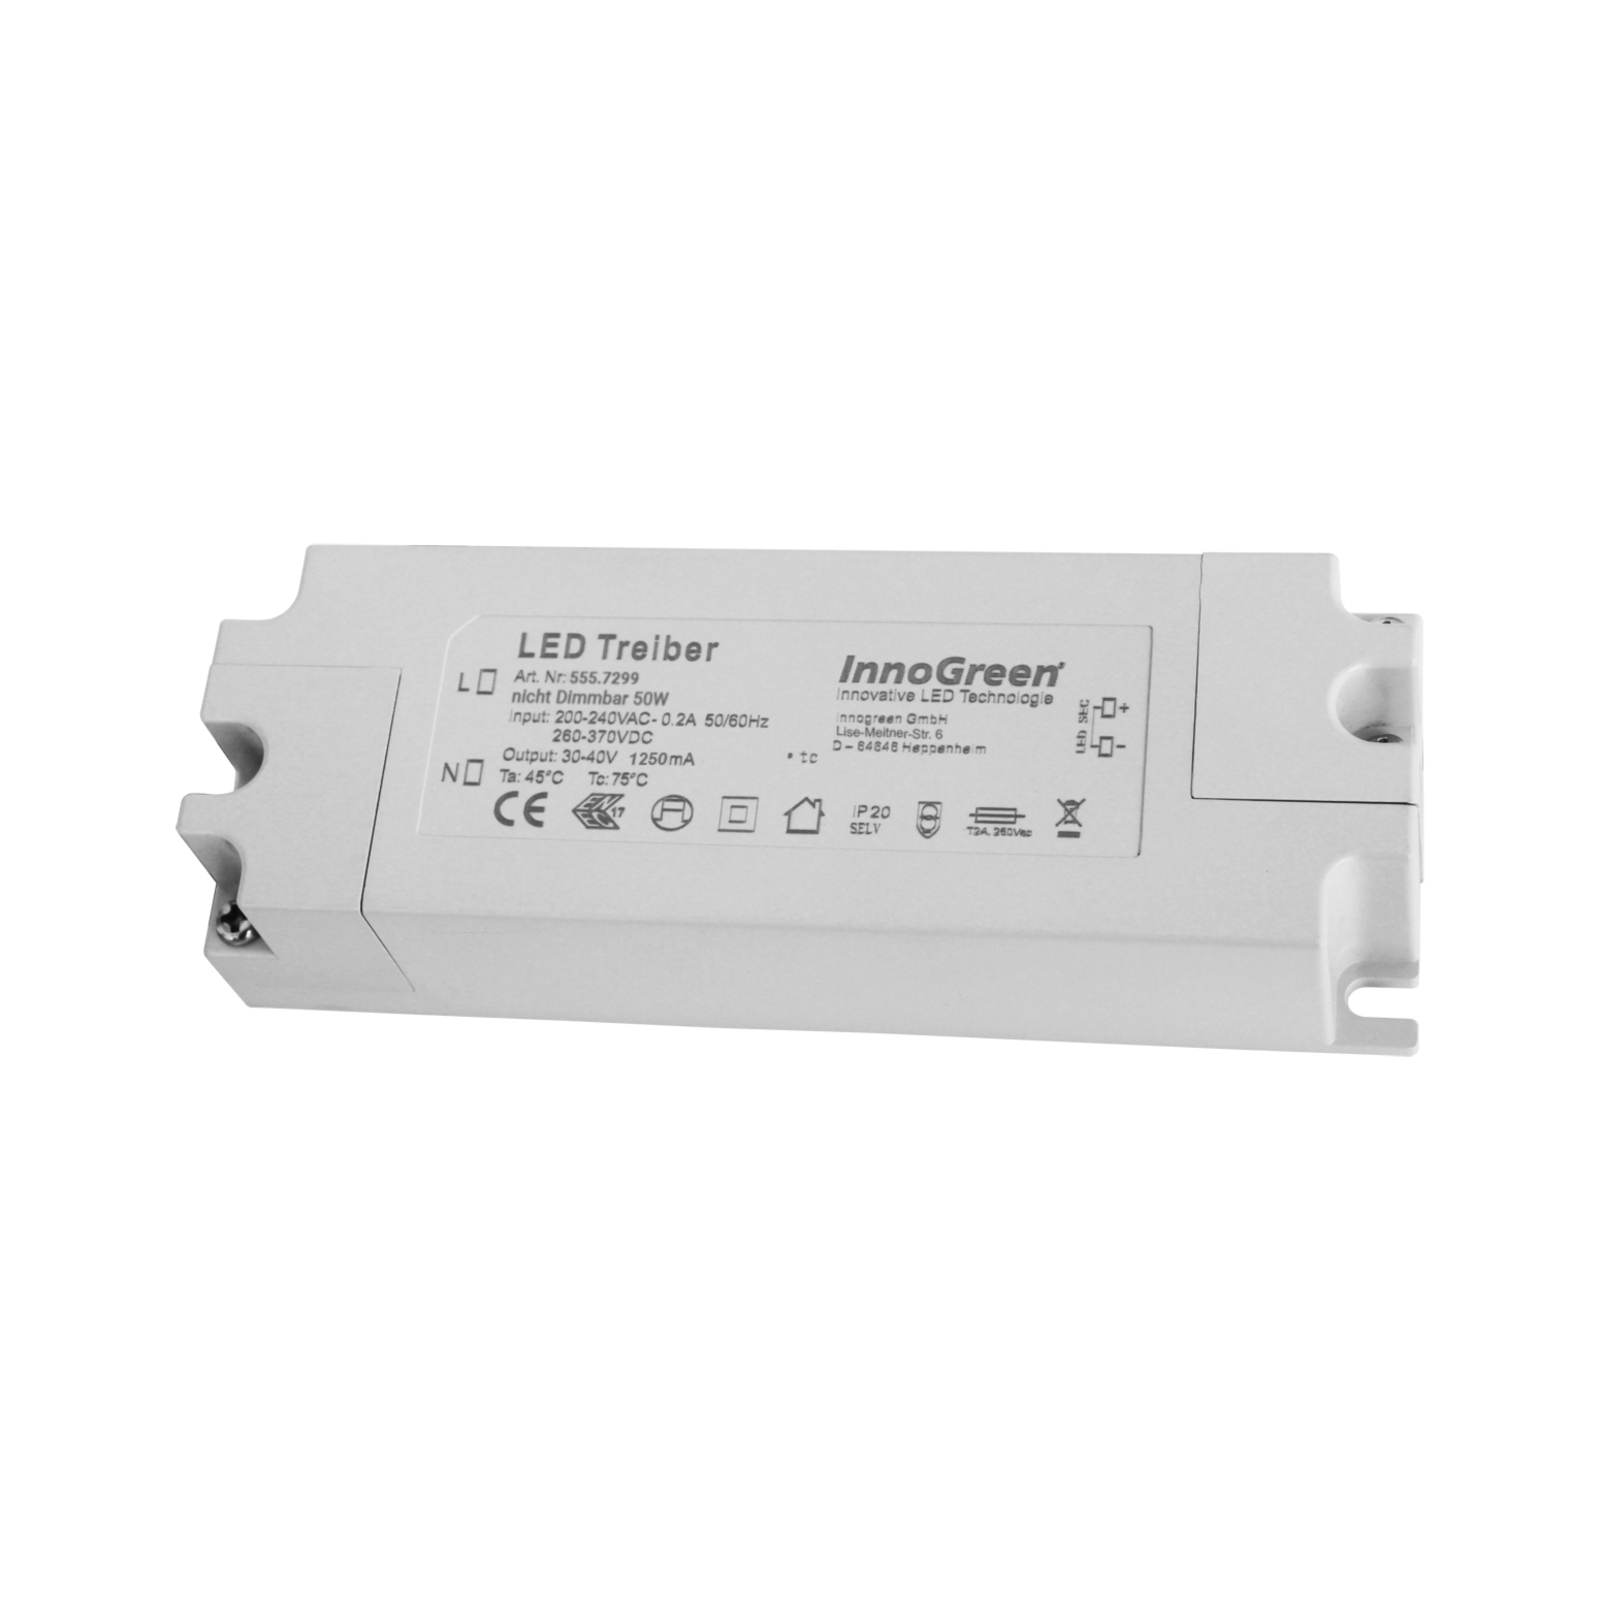 InnoGreen LED driver 220-240 V(AC/DC) 50W